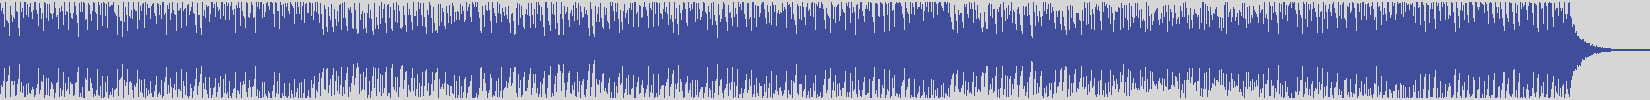 nf_boyz_records [NFY024] Alexander Del Rio - The Mutantz [Original Mix] audio wave form